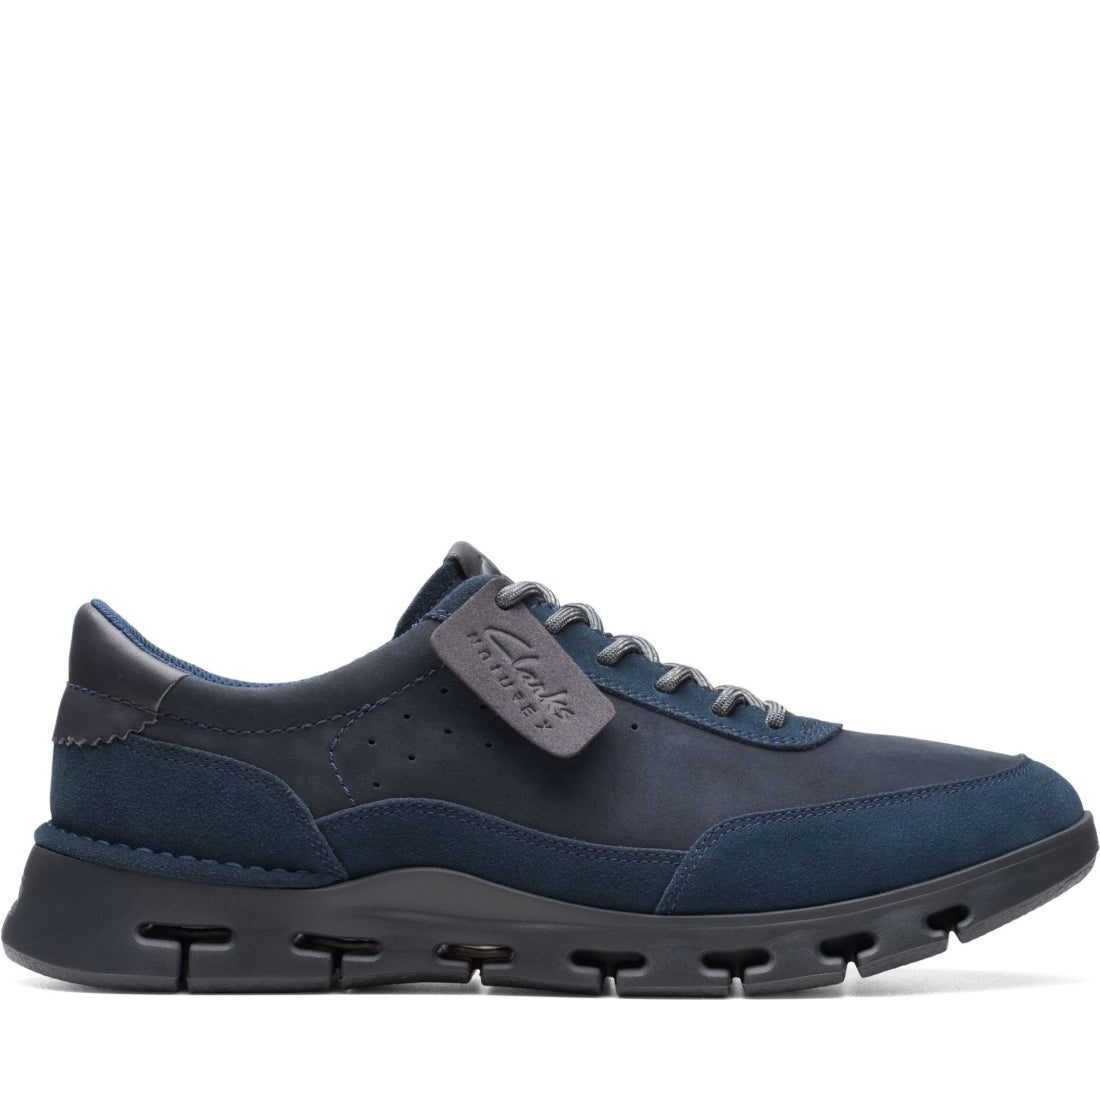 Clarks mens blue nature x one sport shoe | Vilbury London